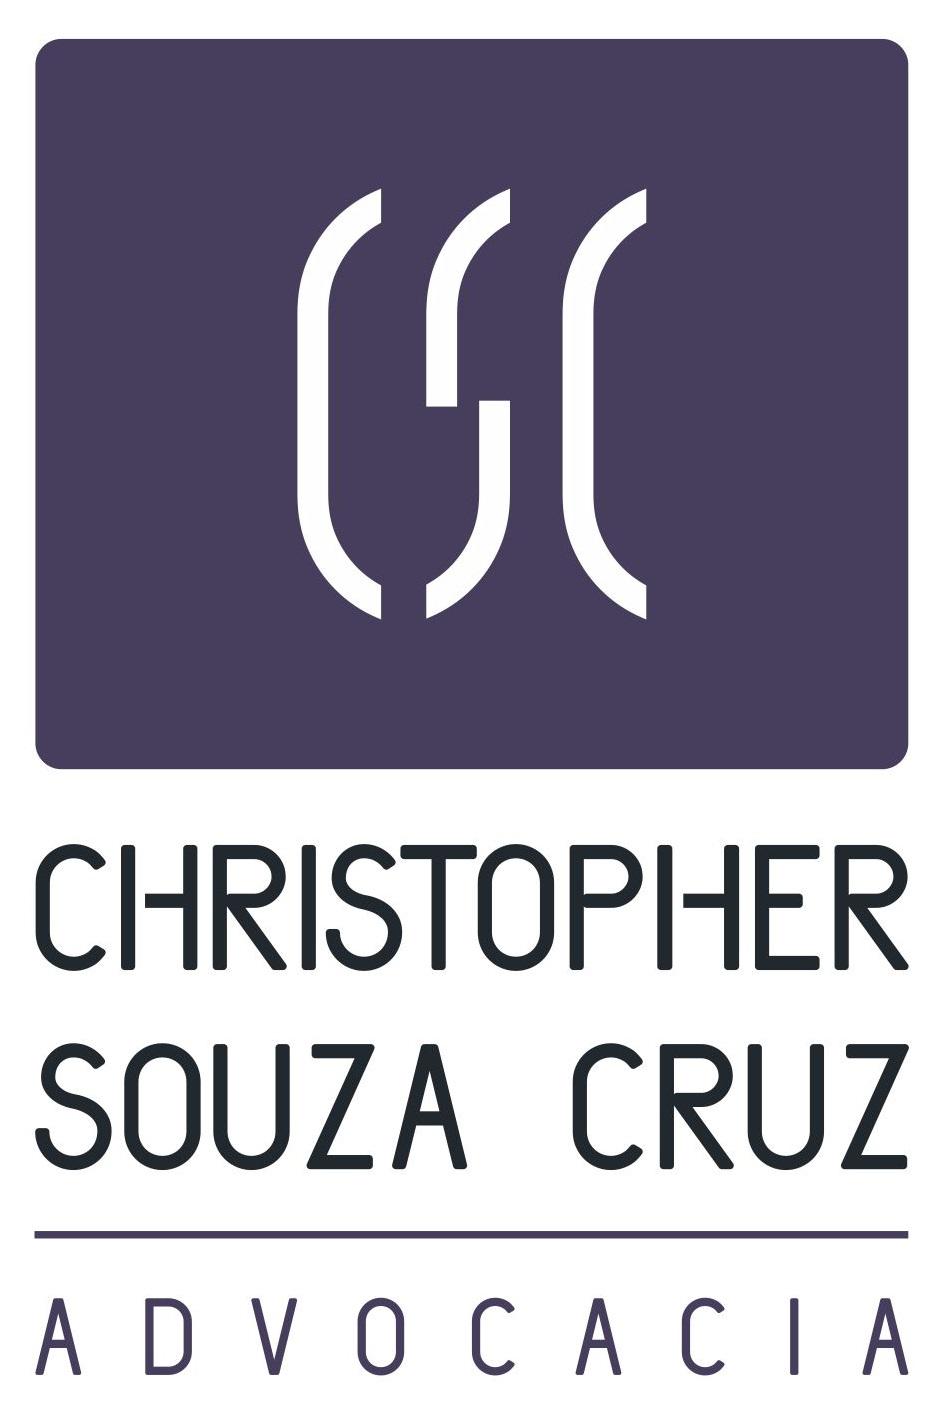 Dr. Christopher Souza Cruz